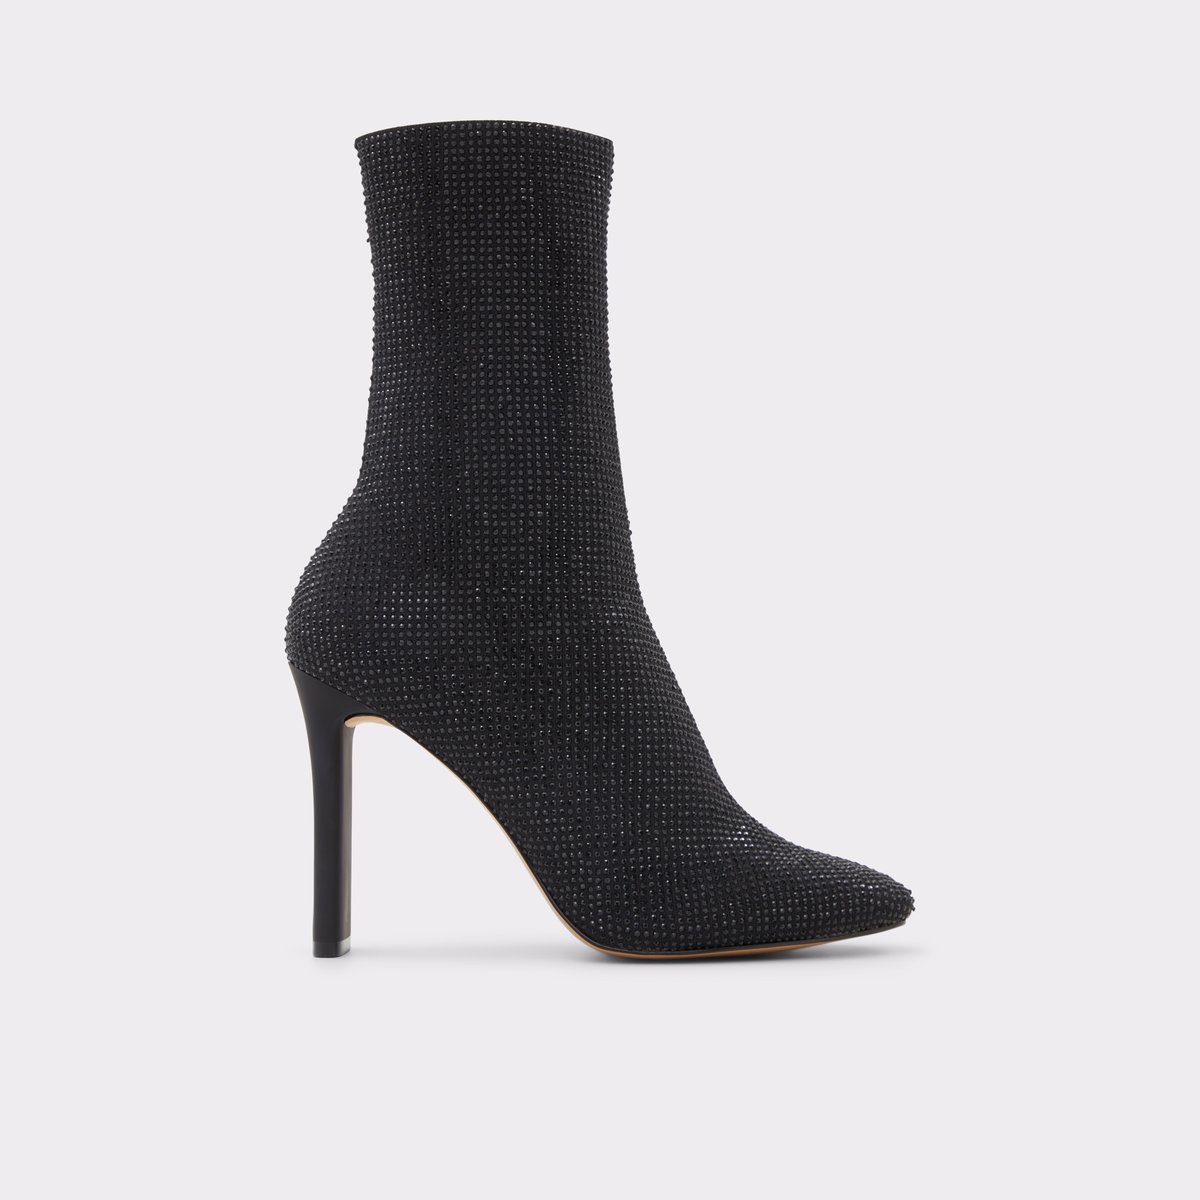 Delylah Black Textile Knit Women's Dress & Heeled Boots | ALDO Canada